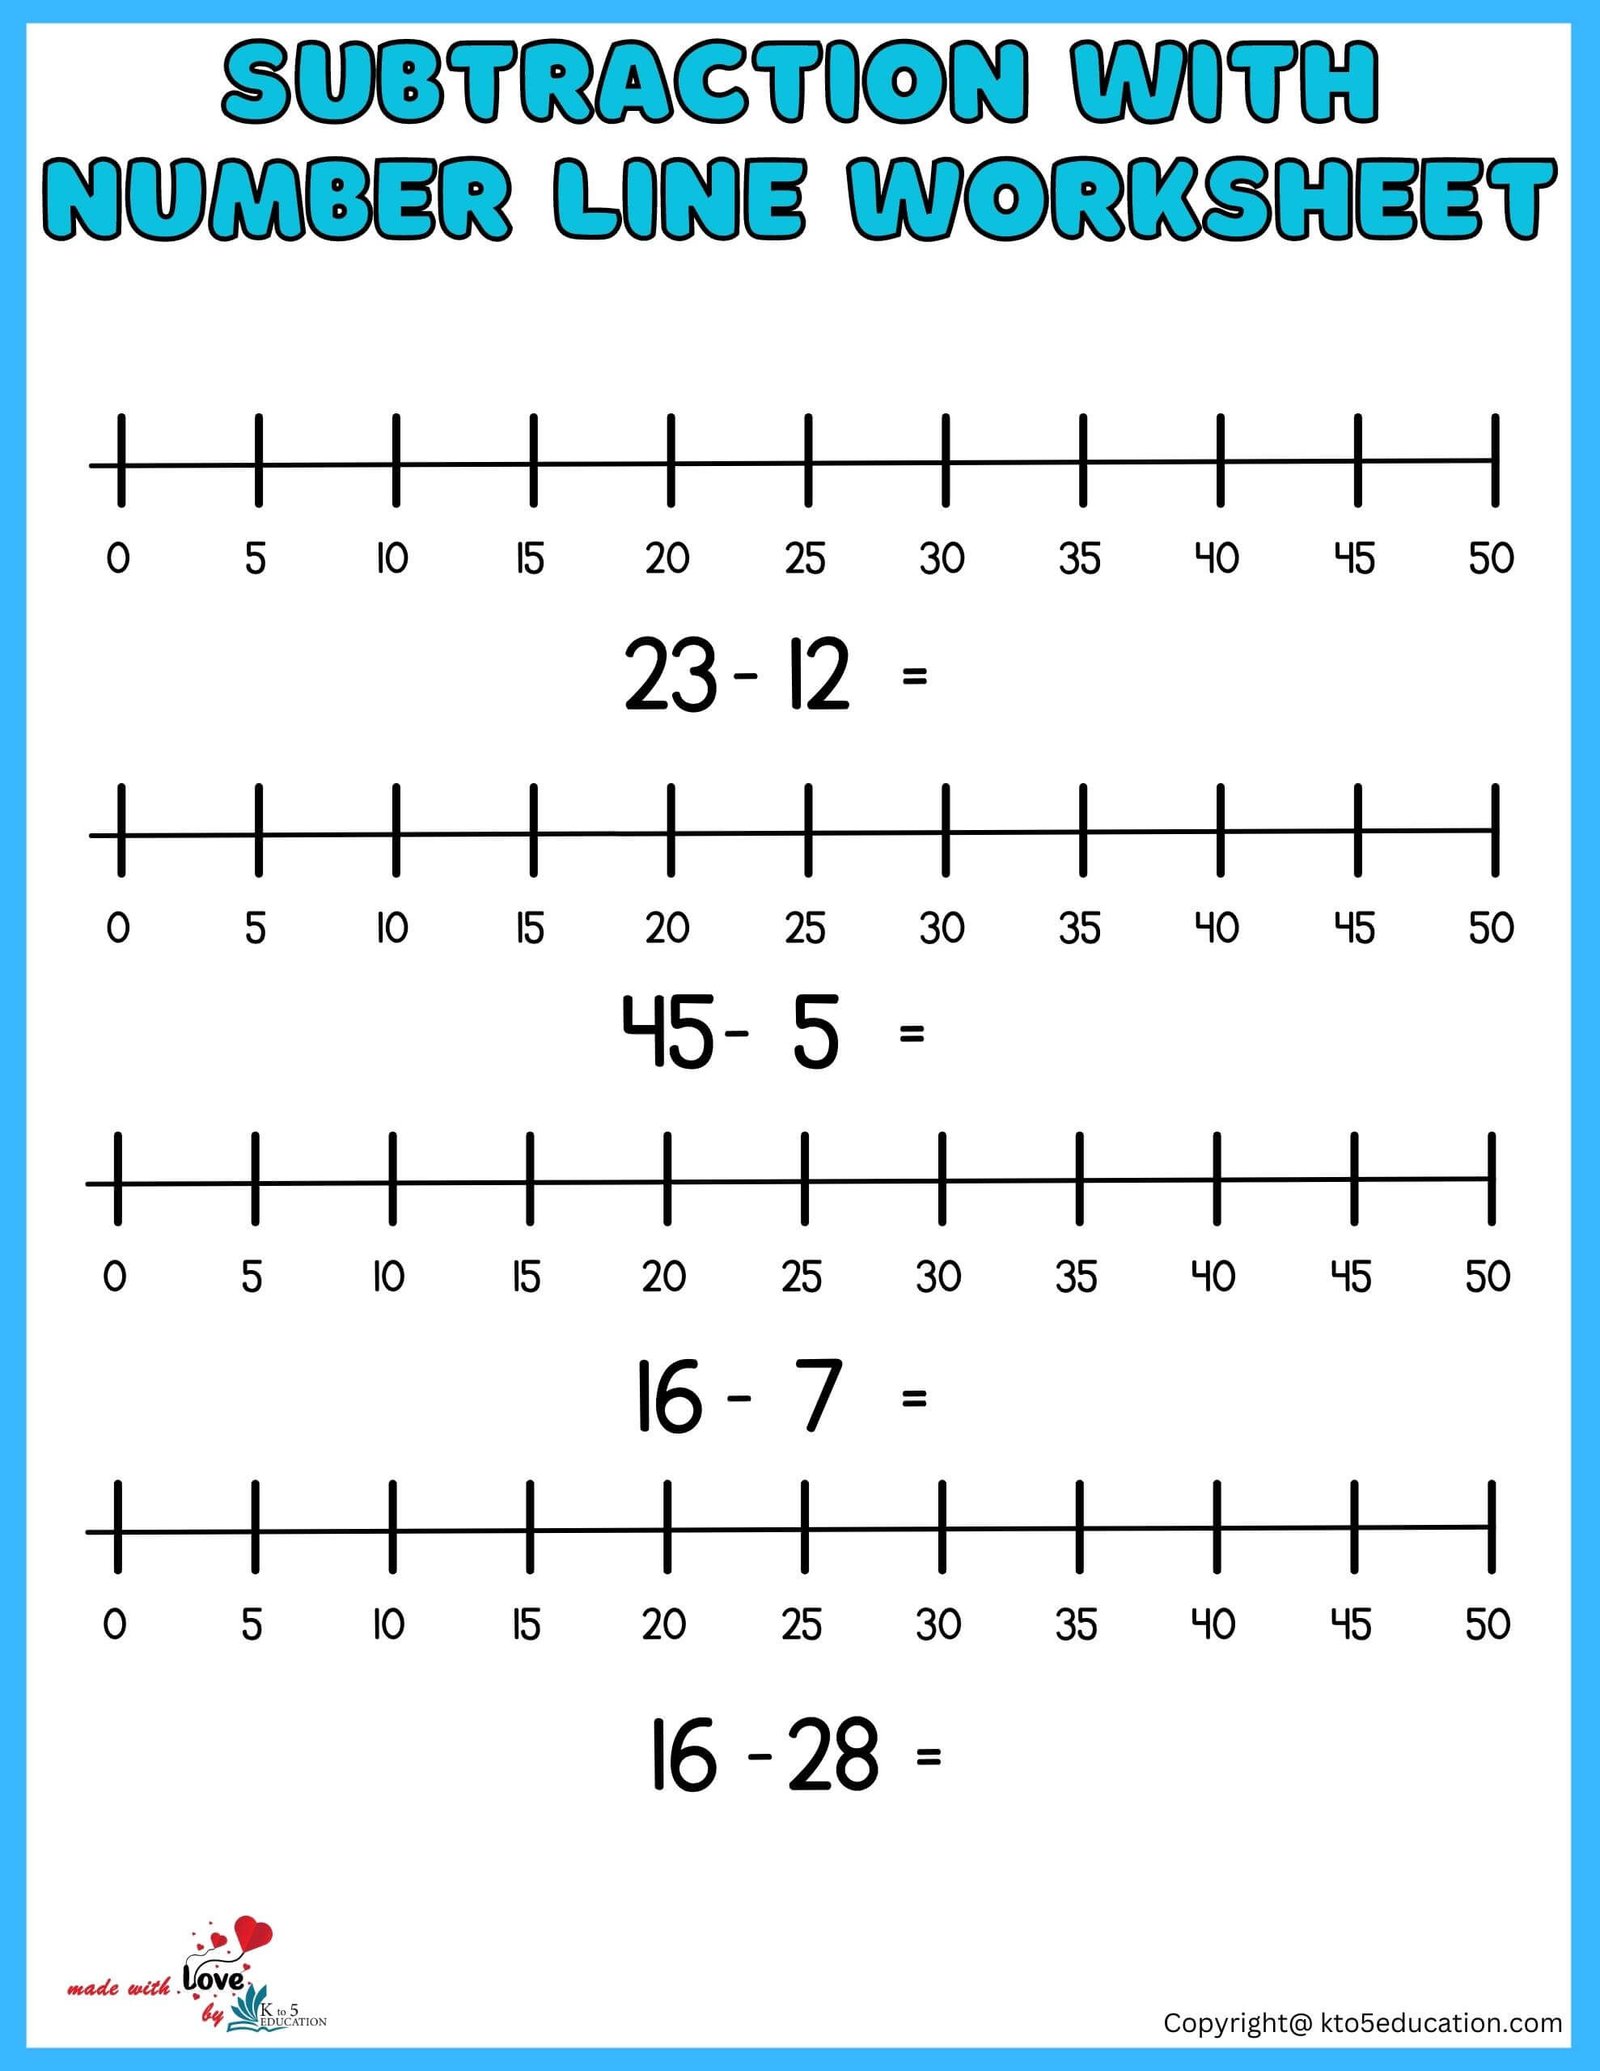 Subtraction With Number Line Worksheet 1-50 3rd Grade